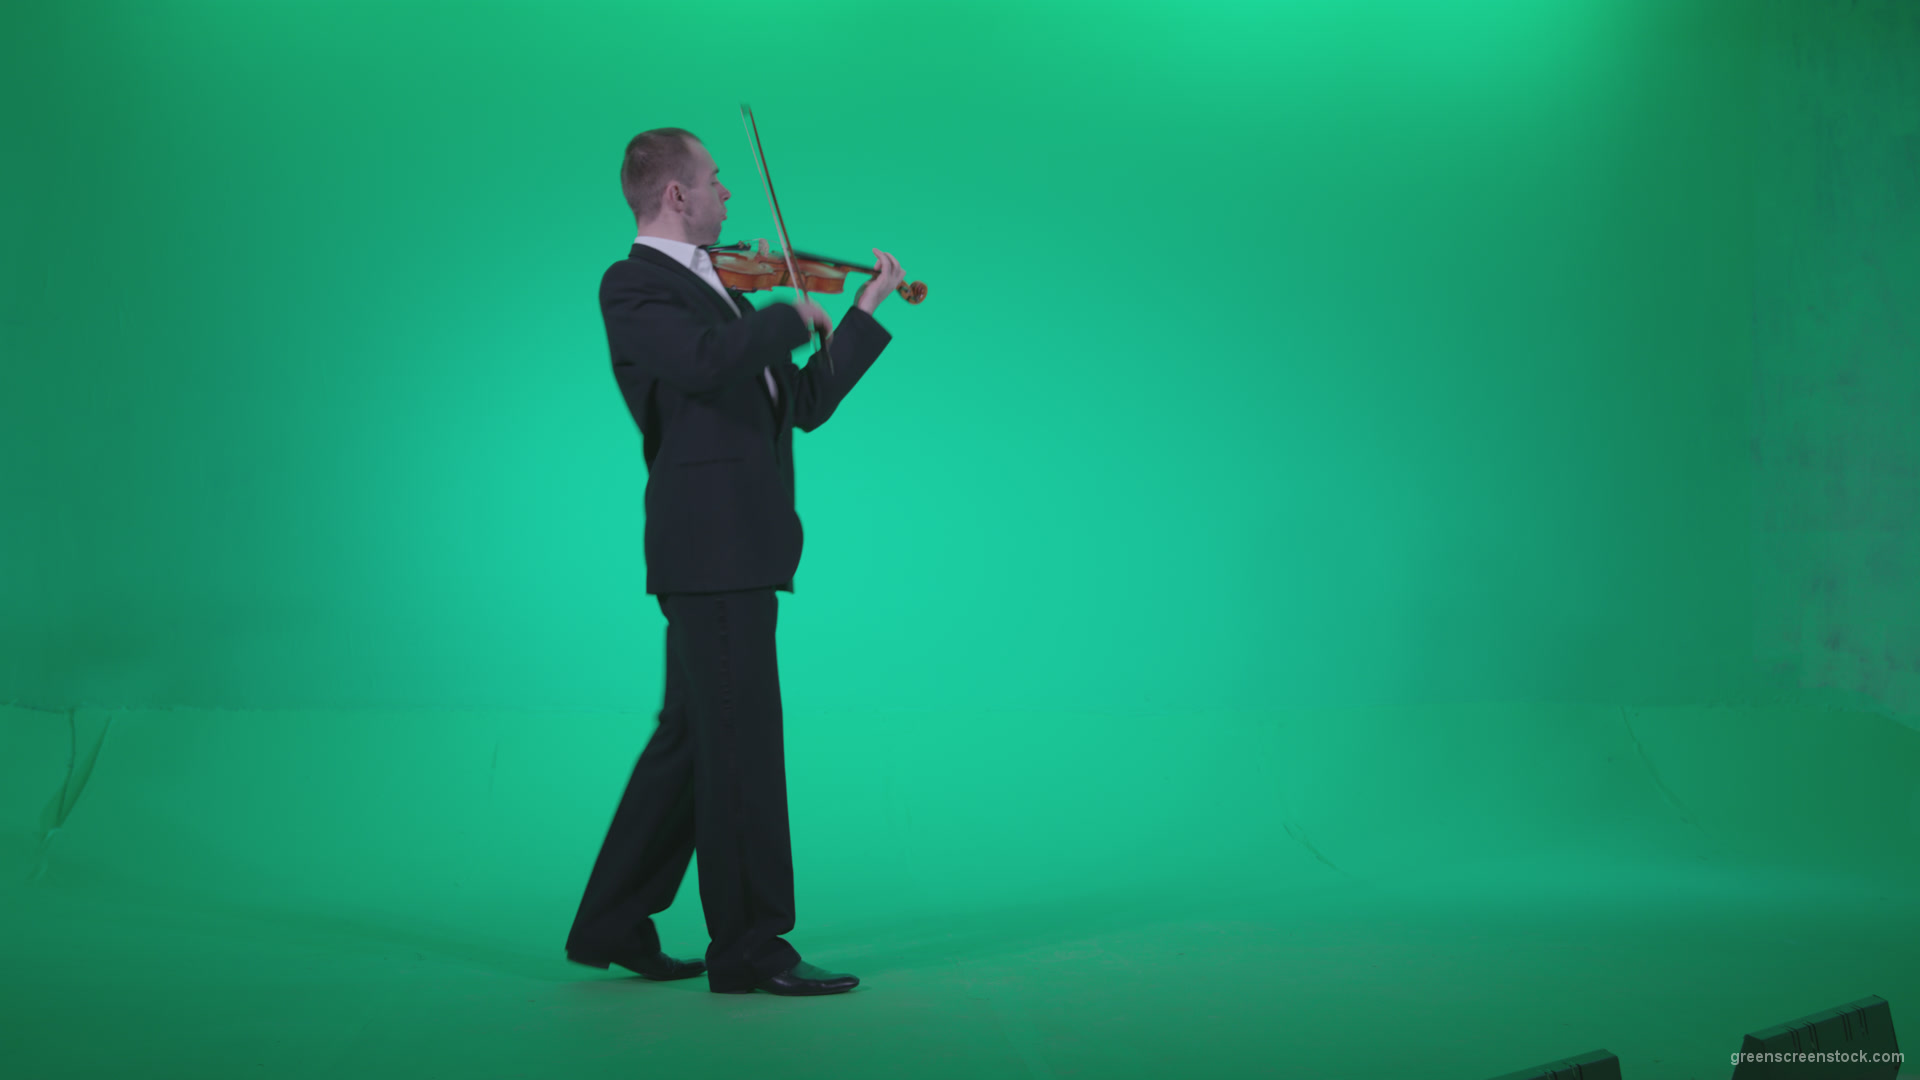 Professional-Violin-player-man-z3_007 Green Screen Stock